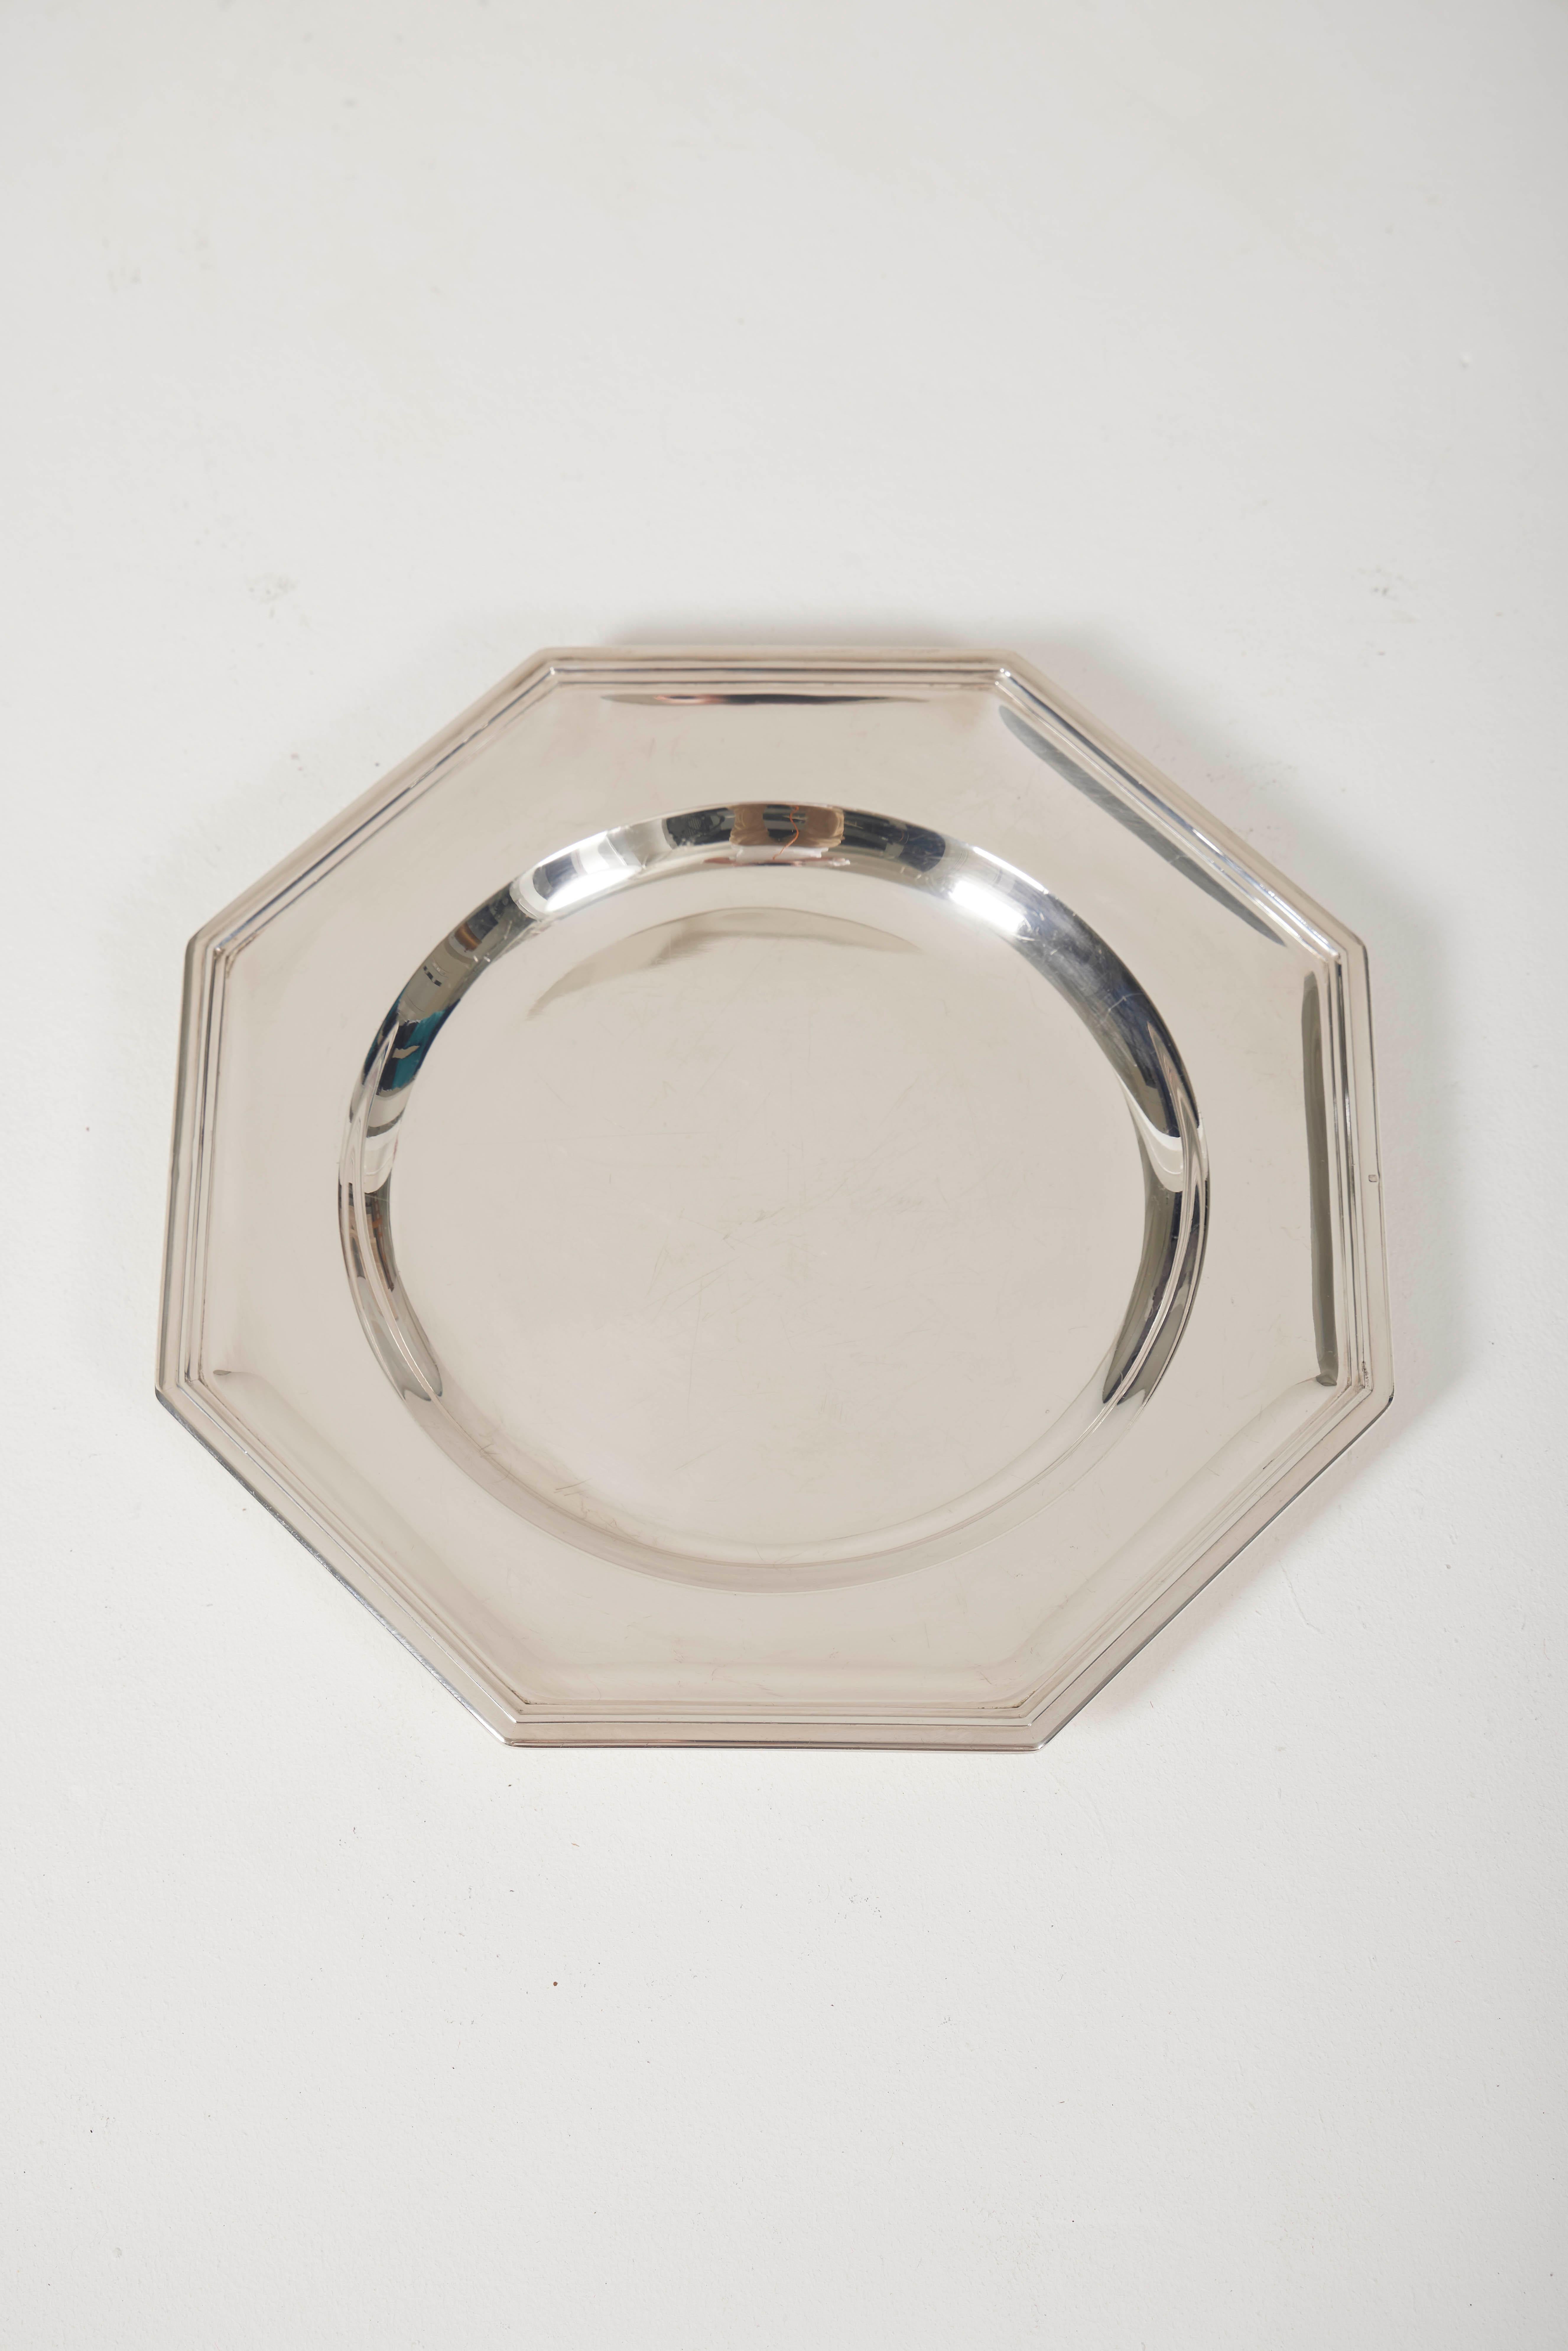 Octagonal silver serving tray. Very good condition. Photo of the hallmark.
DV236